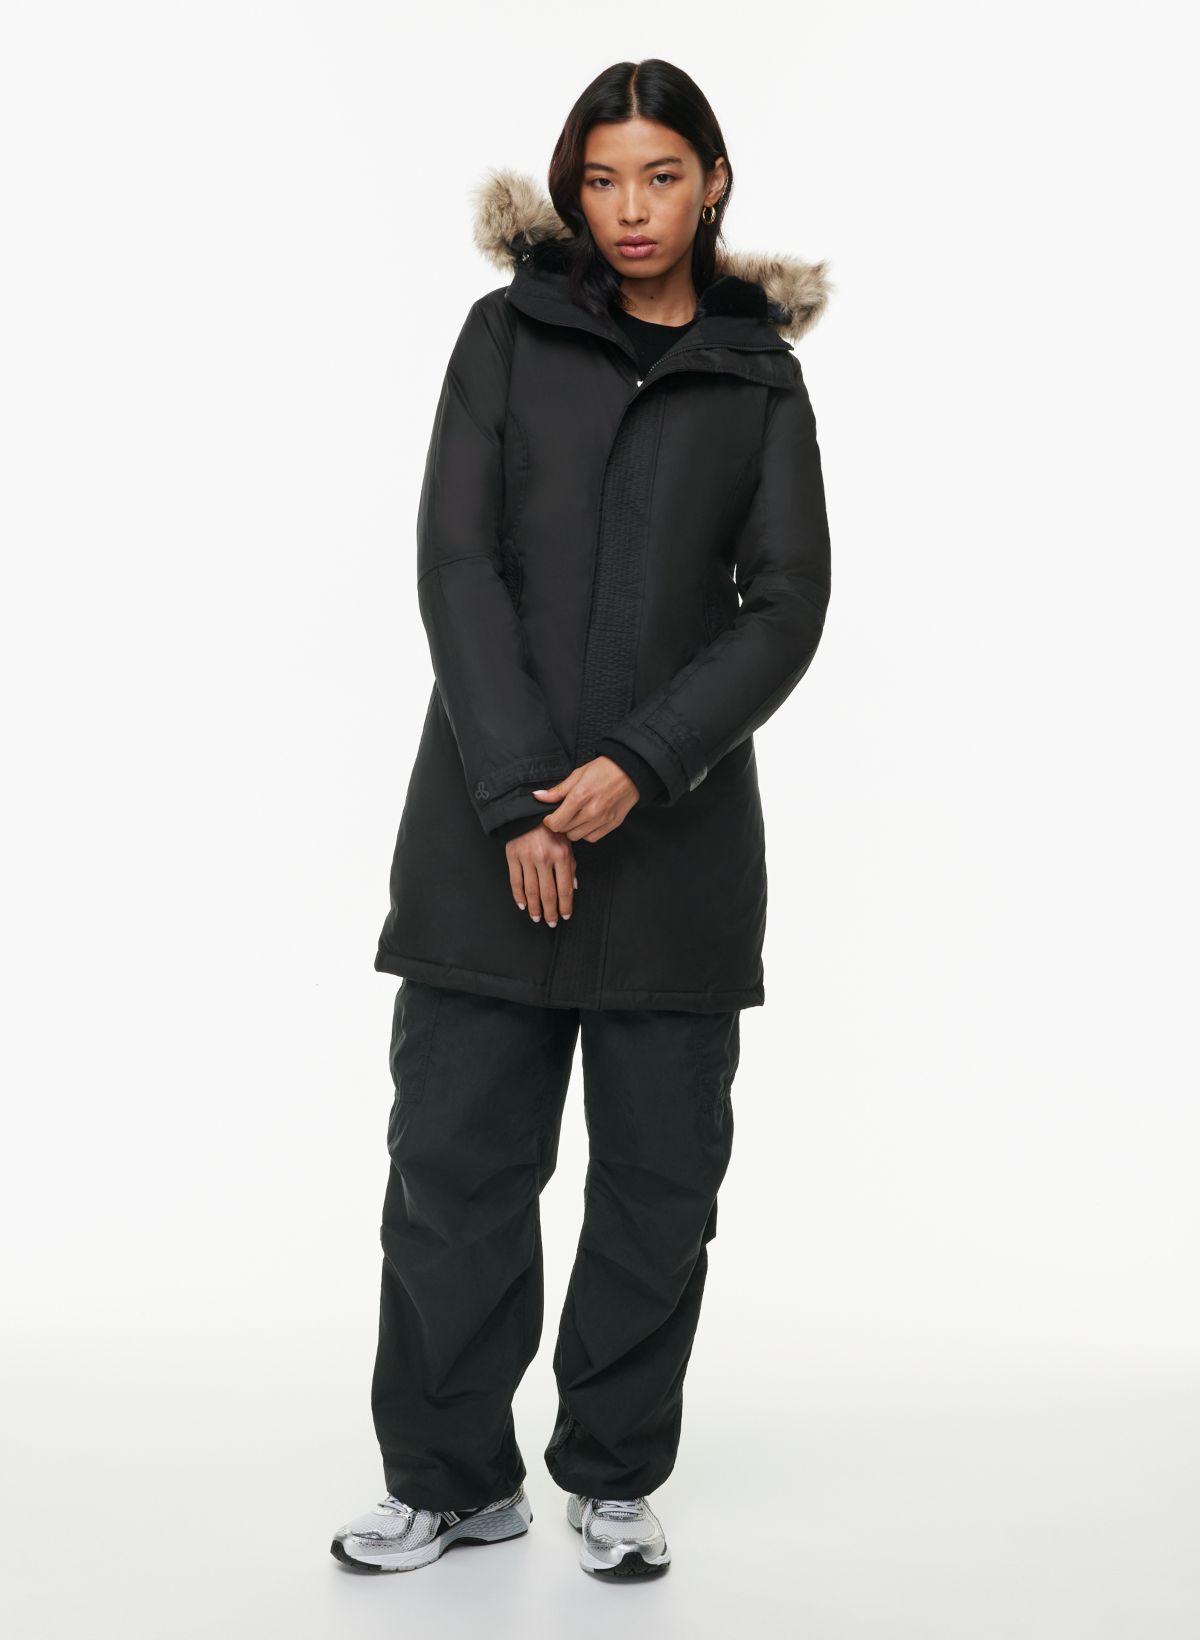 Mens Jacket Sleeveless Vest Winter Thermal Soft Parka Coats Cotton